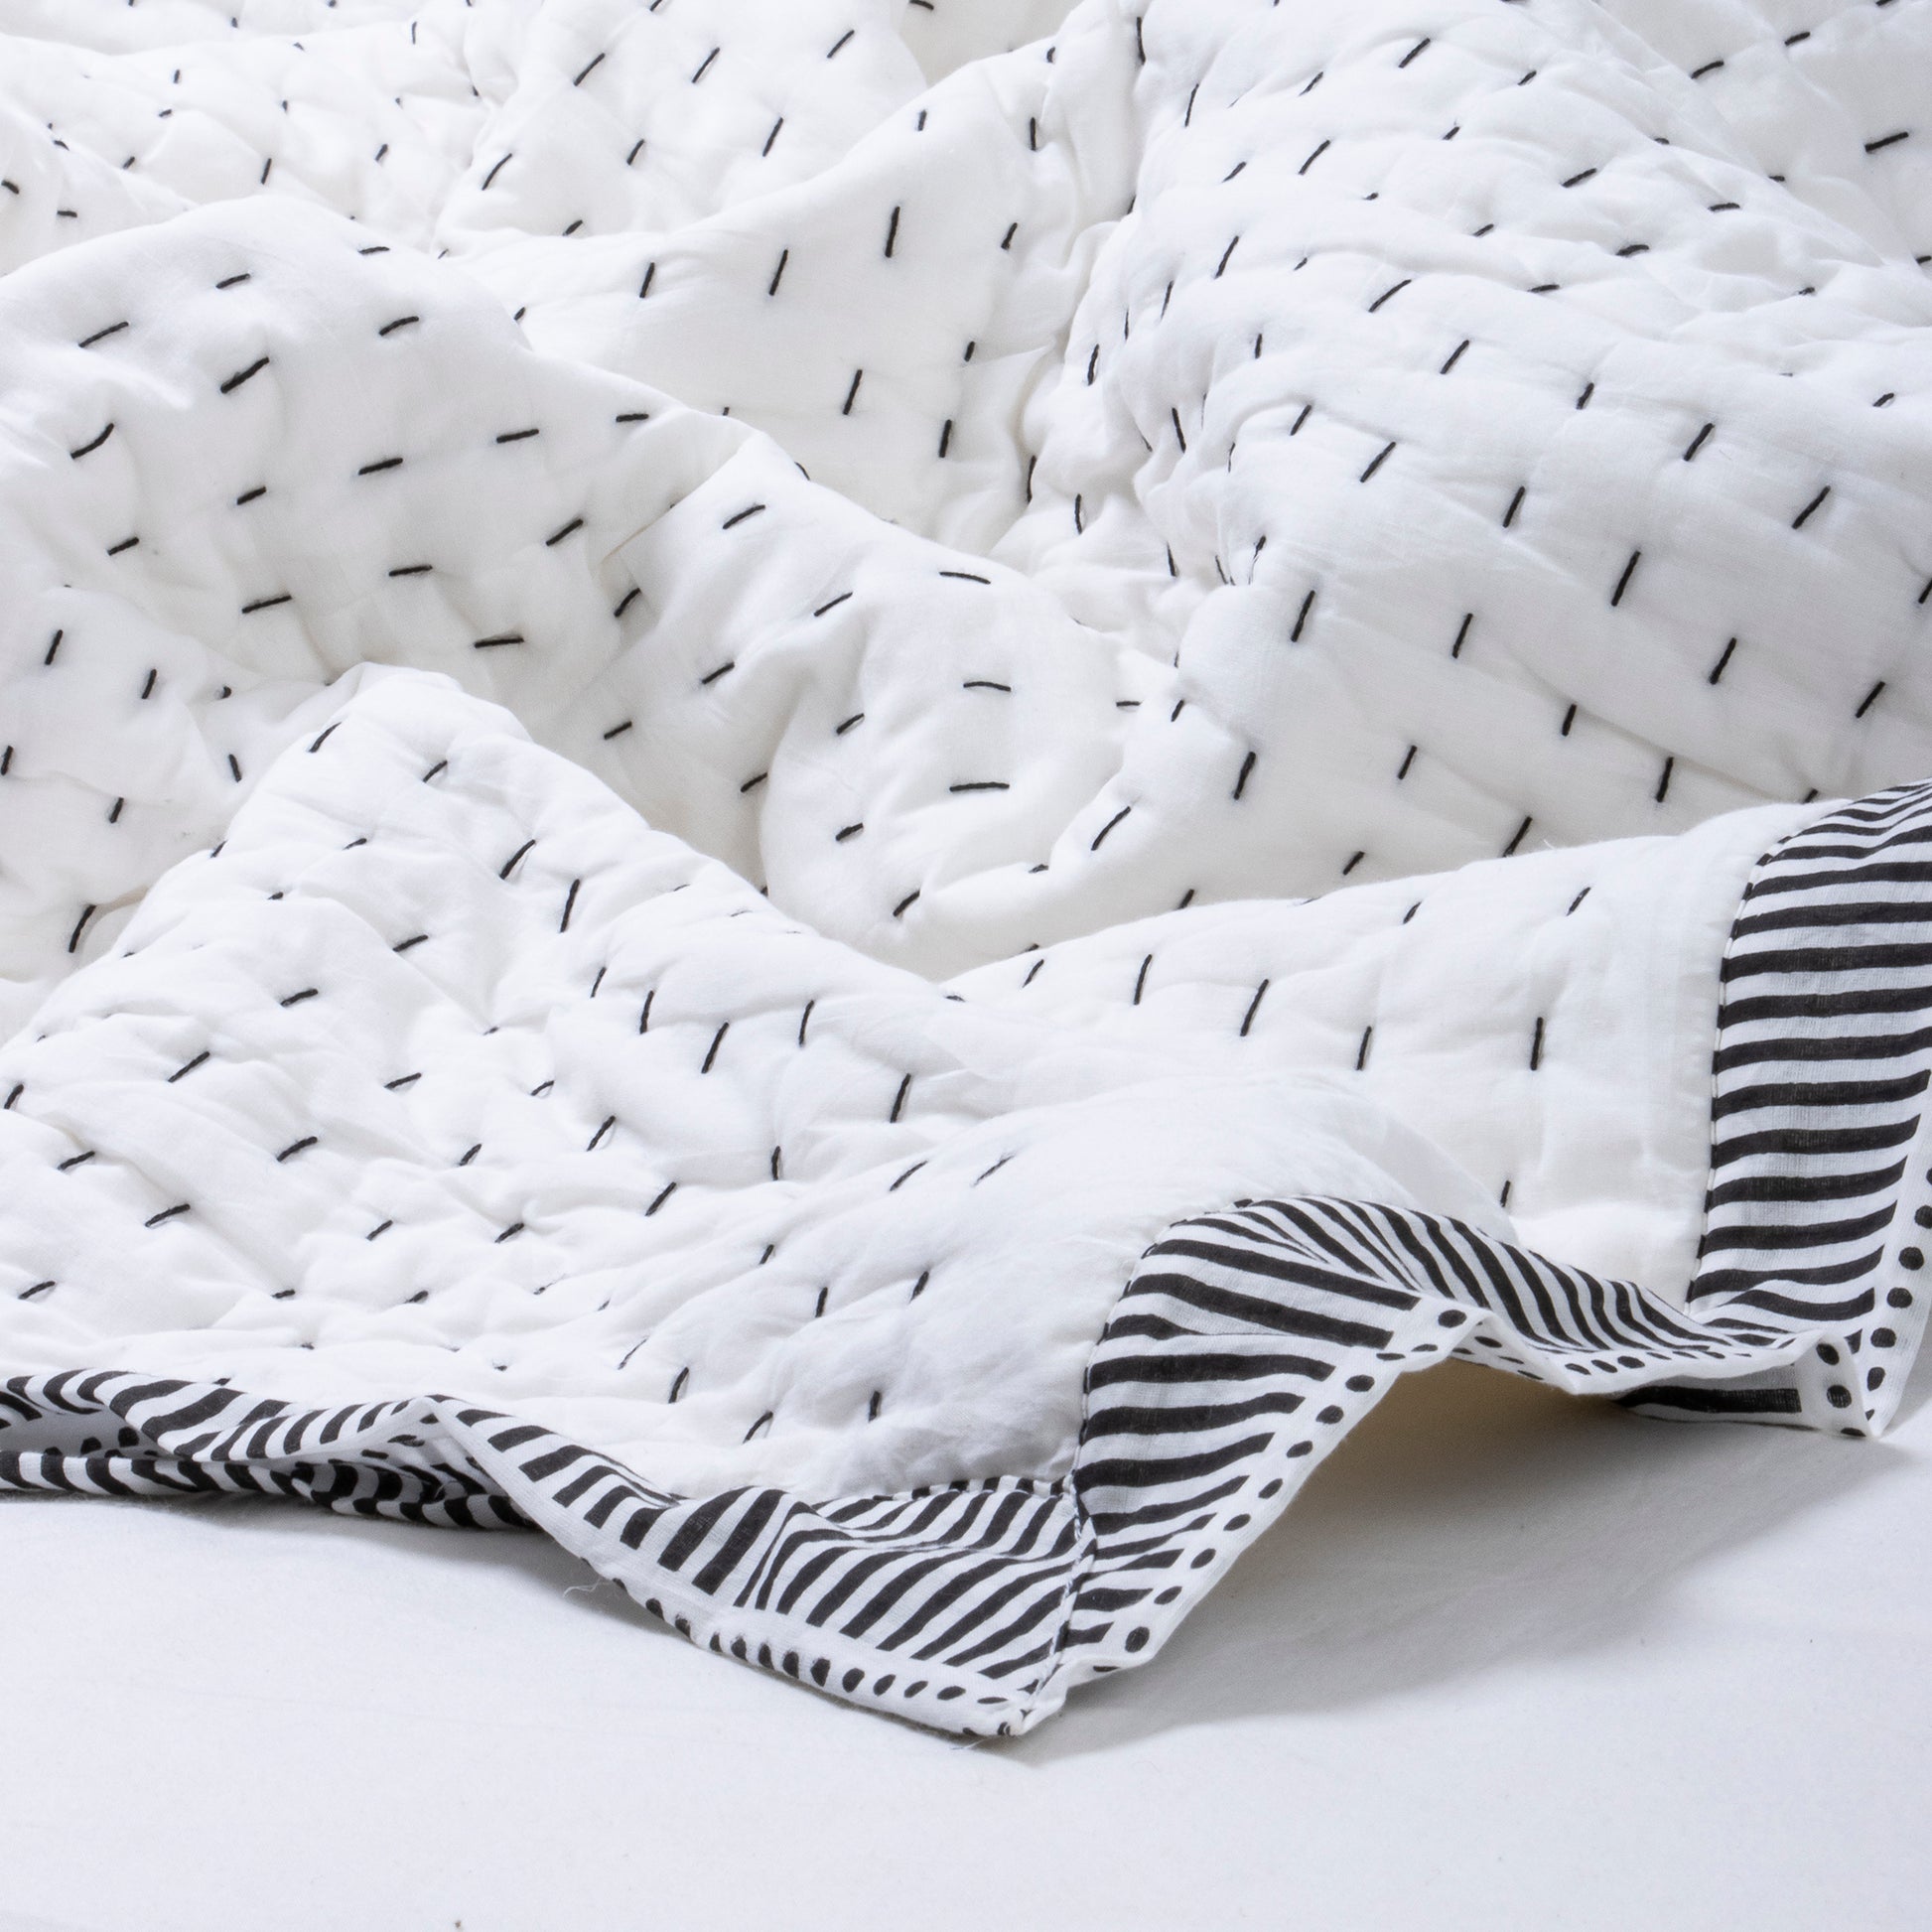 Handmade Black Stripes Print Cotton Reversible Indian Kantha Quilt